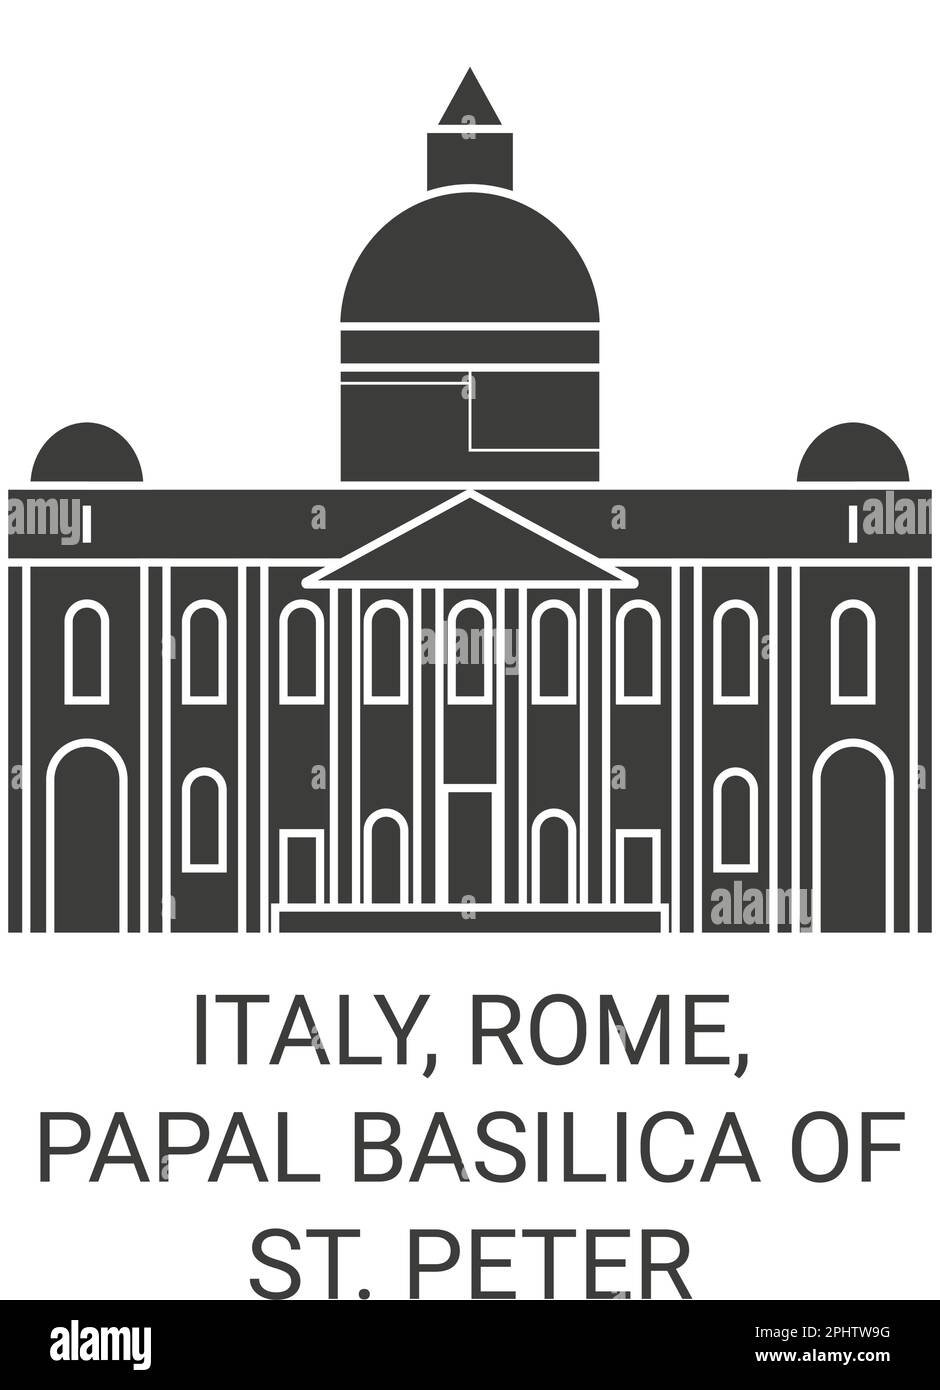 Italy, Rome, Papal Basilica Of St. Peter travel landmark vector illustration Stock Vector